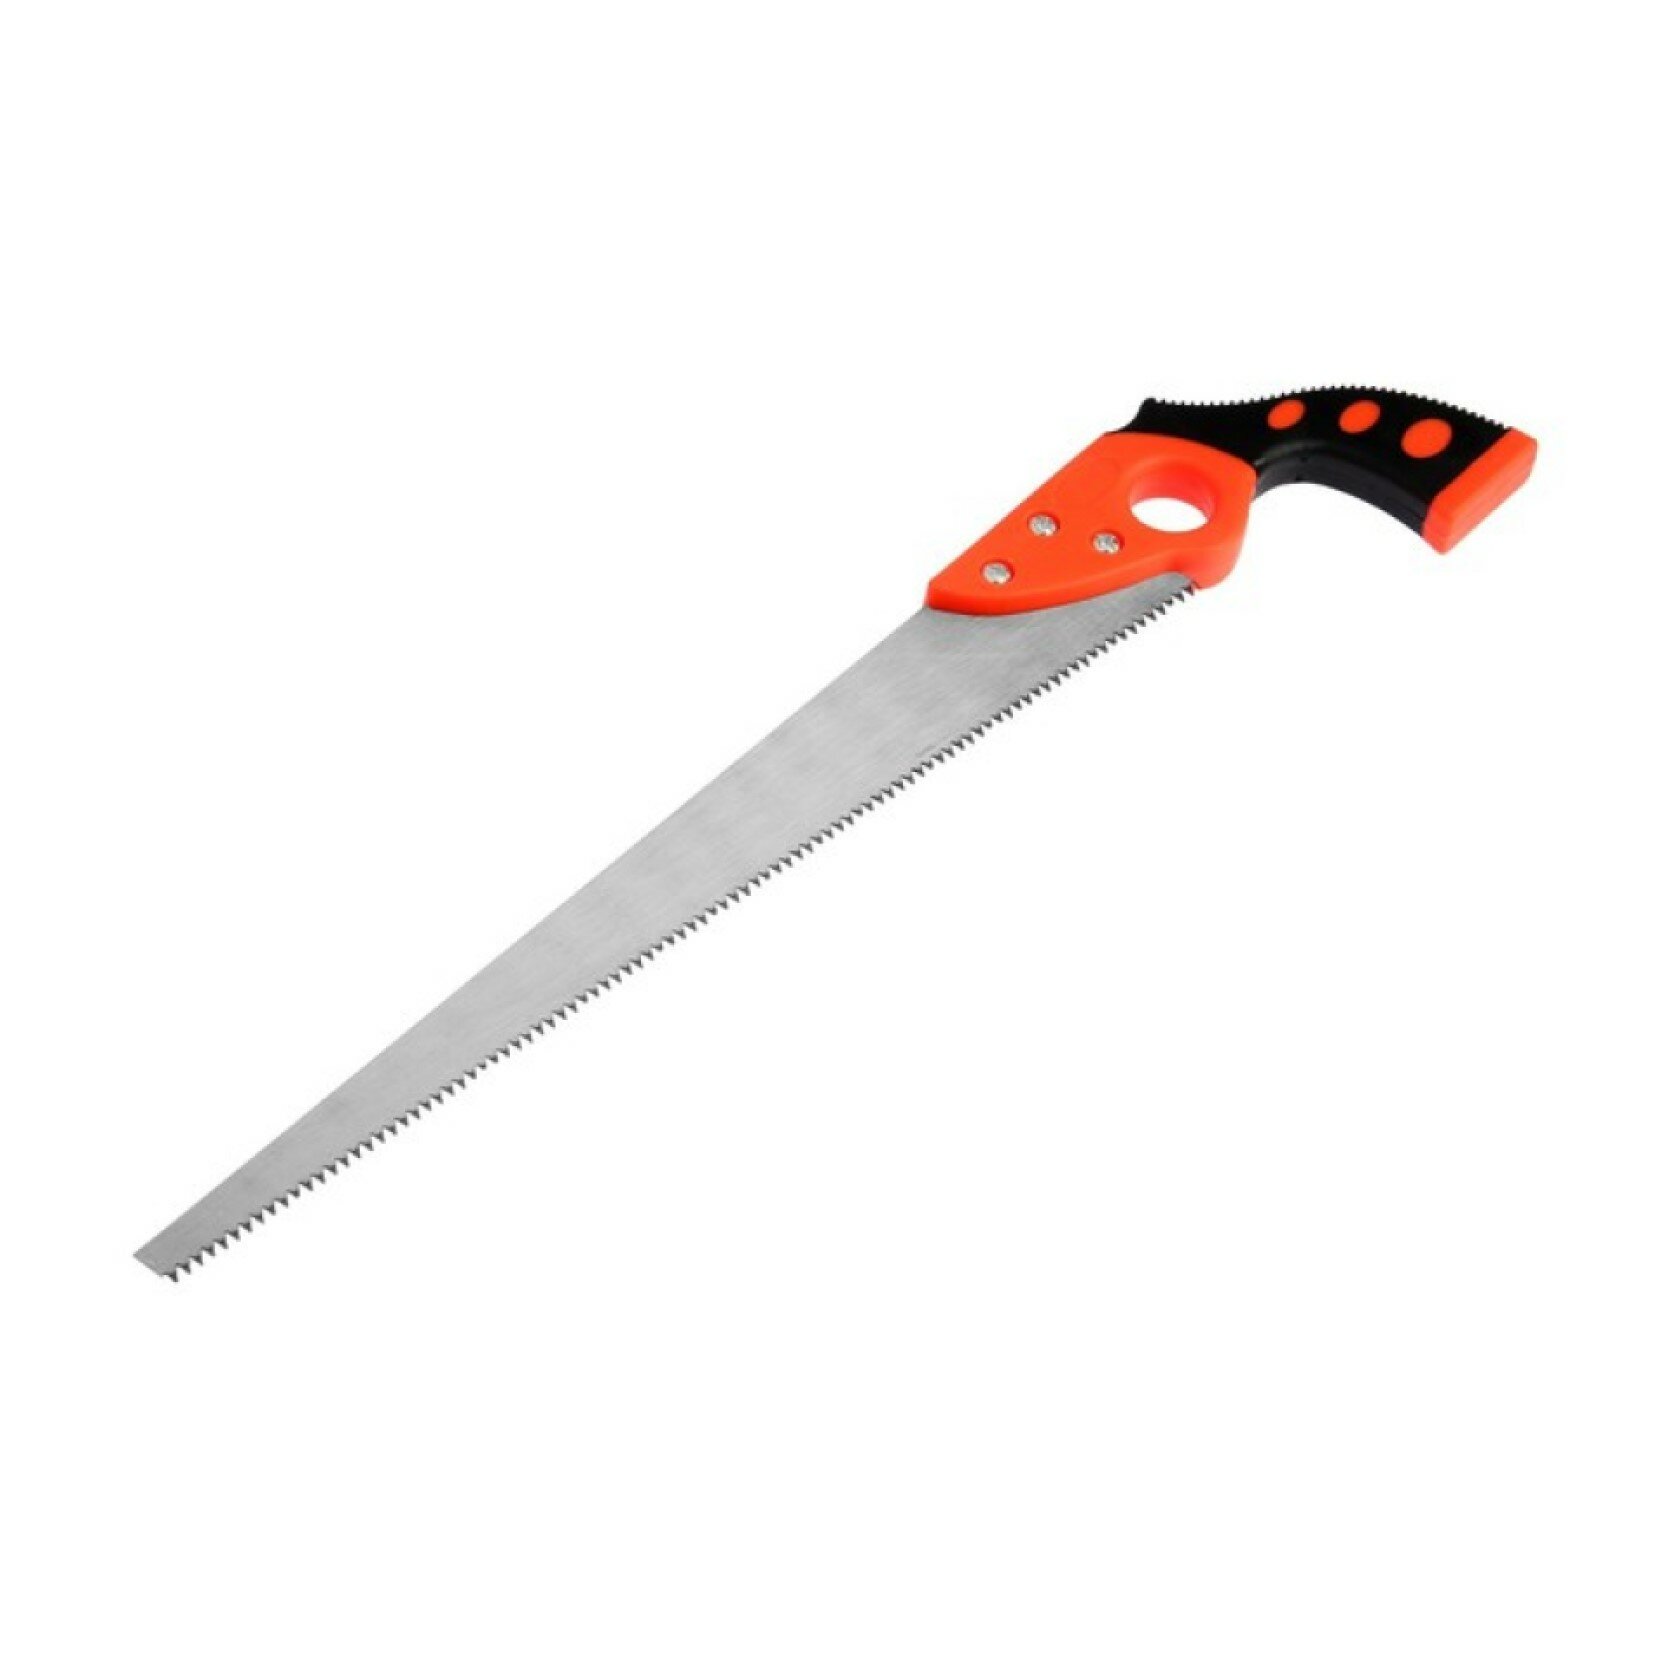 Ножовка по дереву, выкружная, пластиковая рукоятка, 300 мм, 7-8 TPI